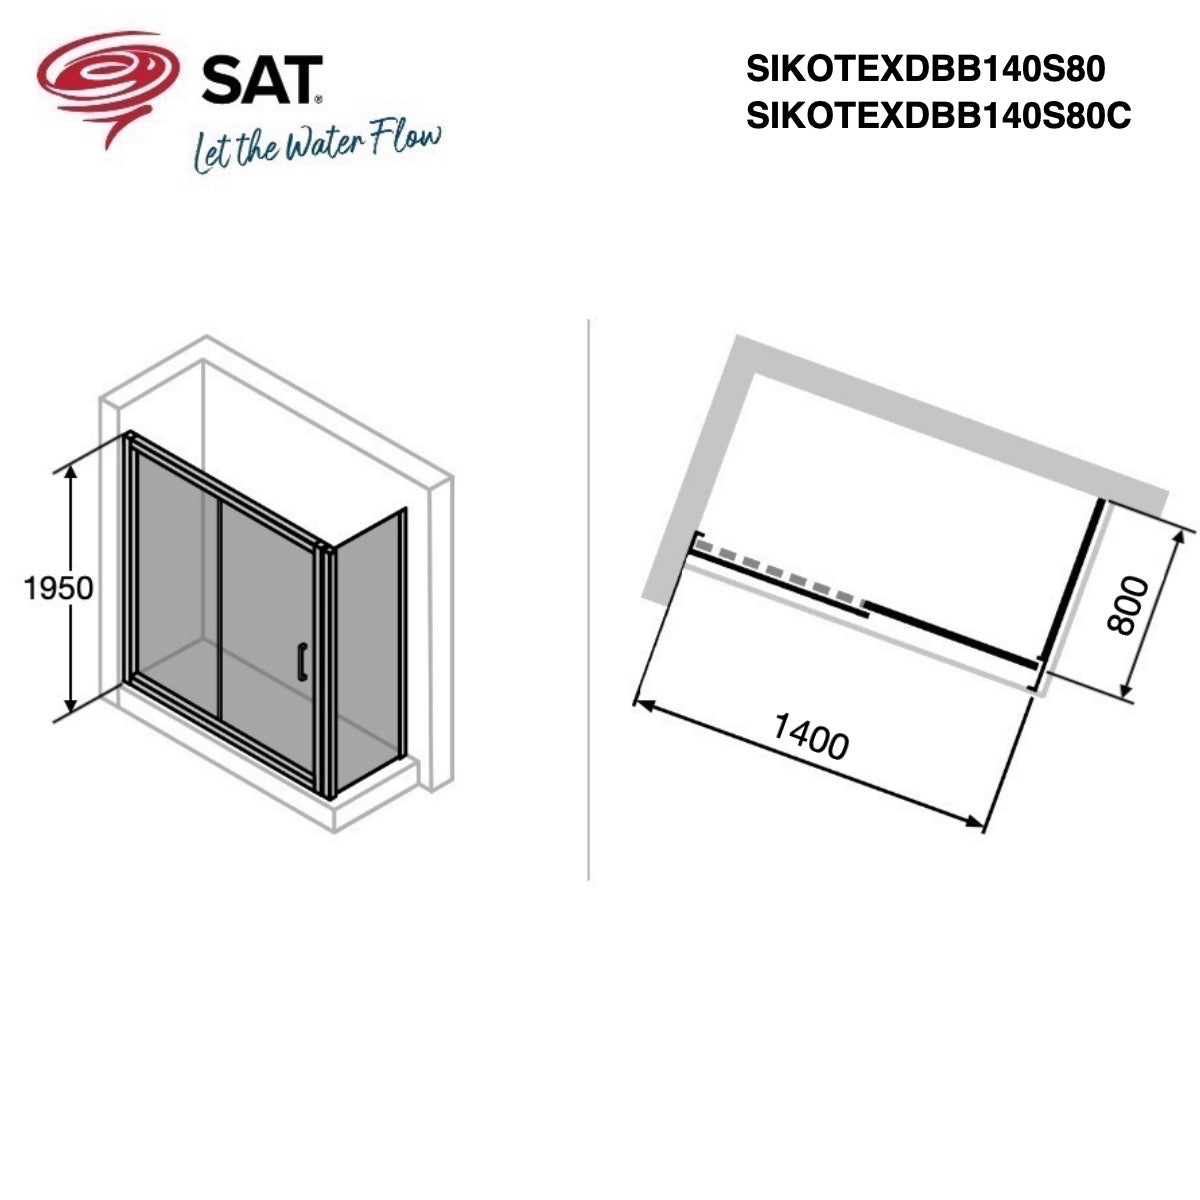 SIKOTEXDBB140S80 SAT TEX 140 x 80 cm pravokotna tuš kabina brez okvirja